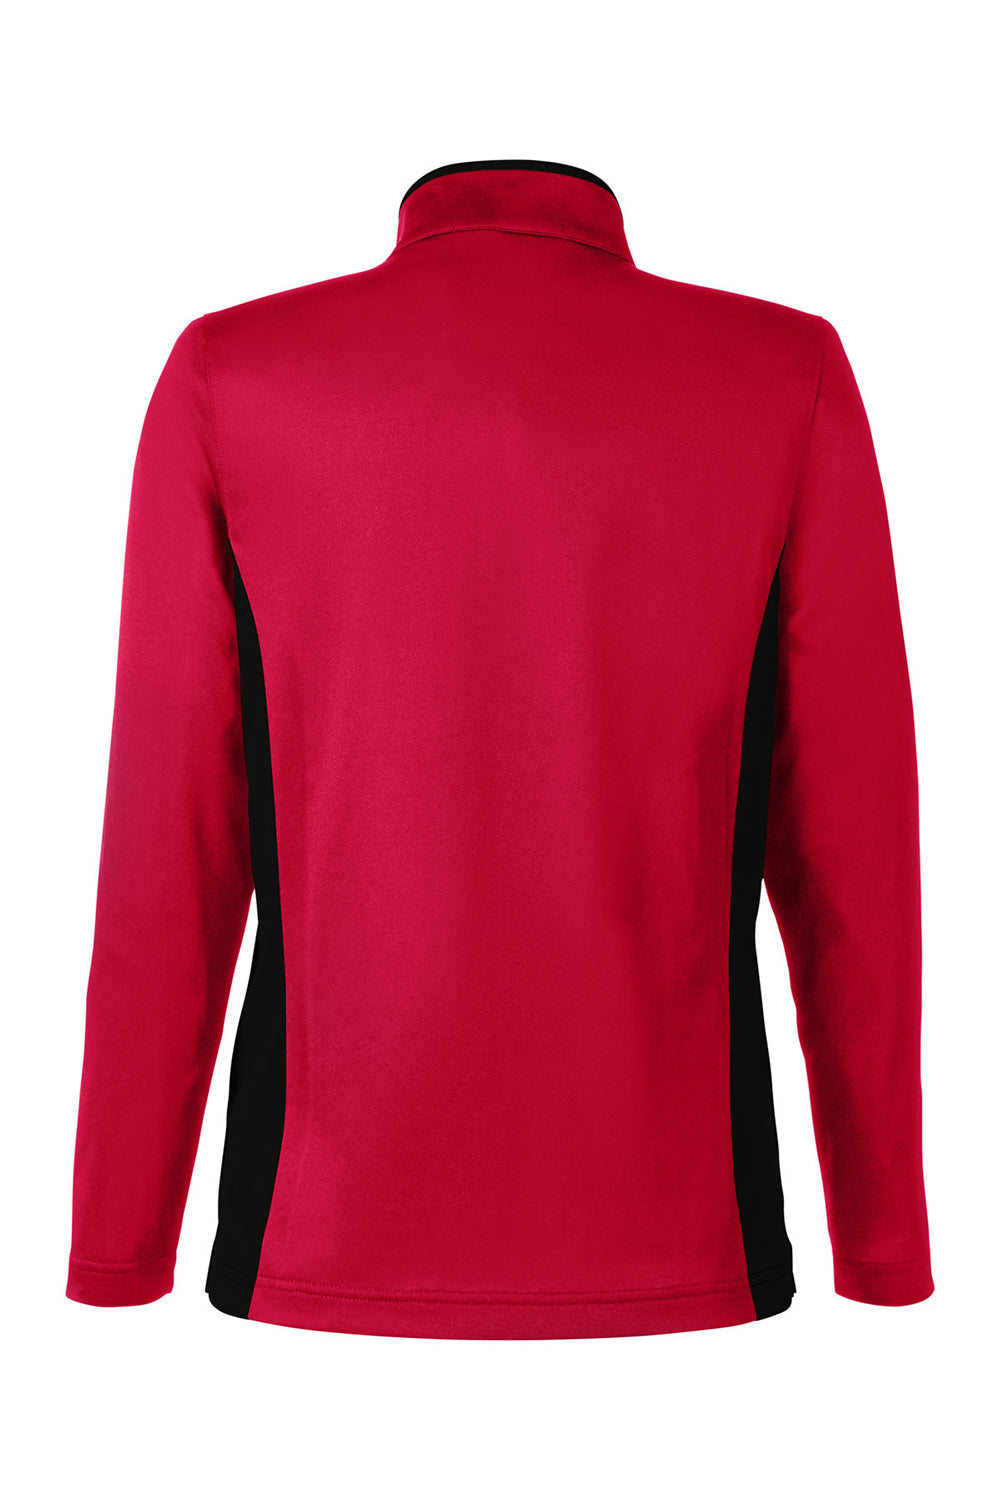 Harriton M786W Womens Flash Performance Moisture Wicking Colorblock 1/4 Zip Sweatshirt Red/Black Flat Back